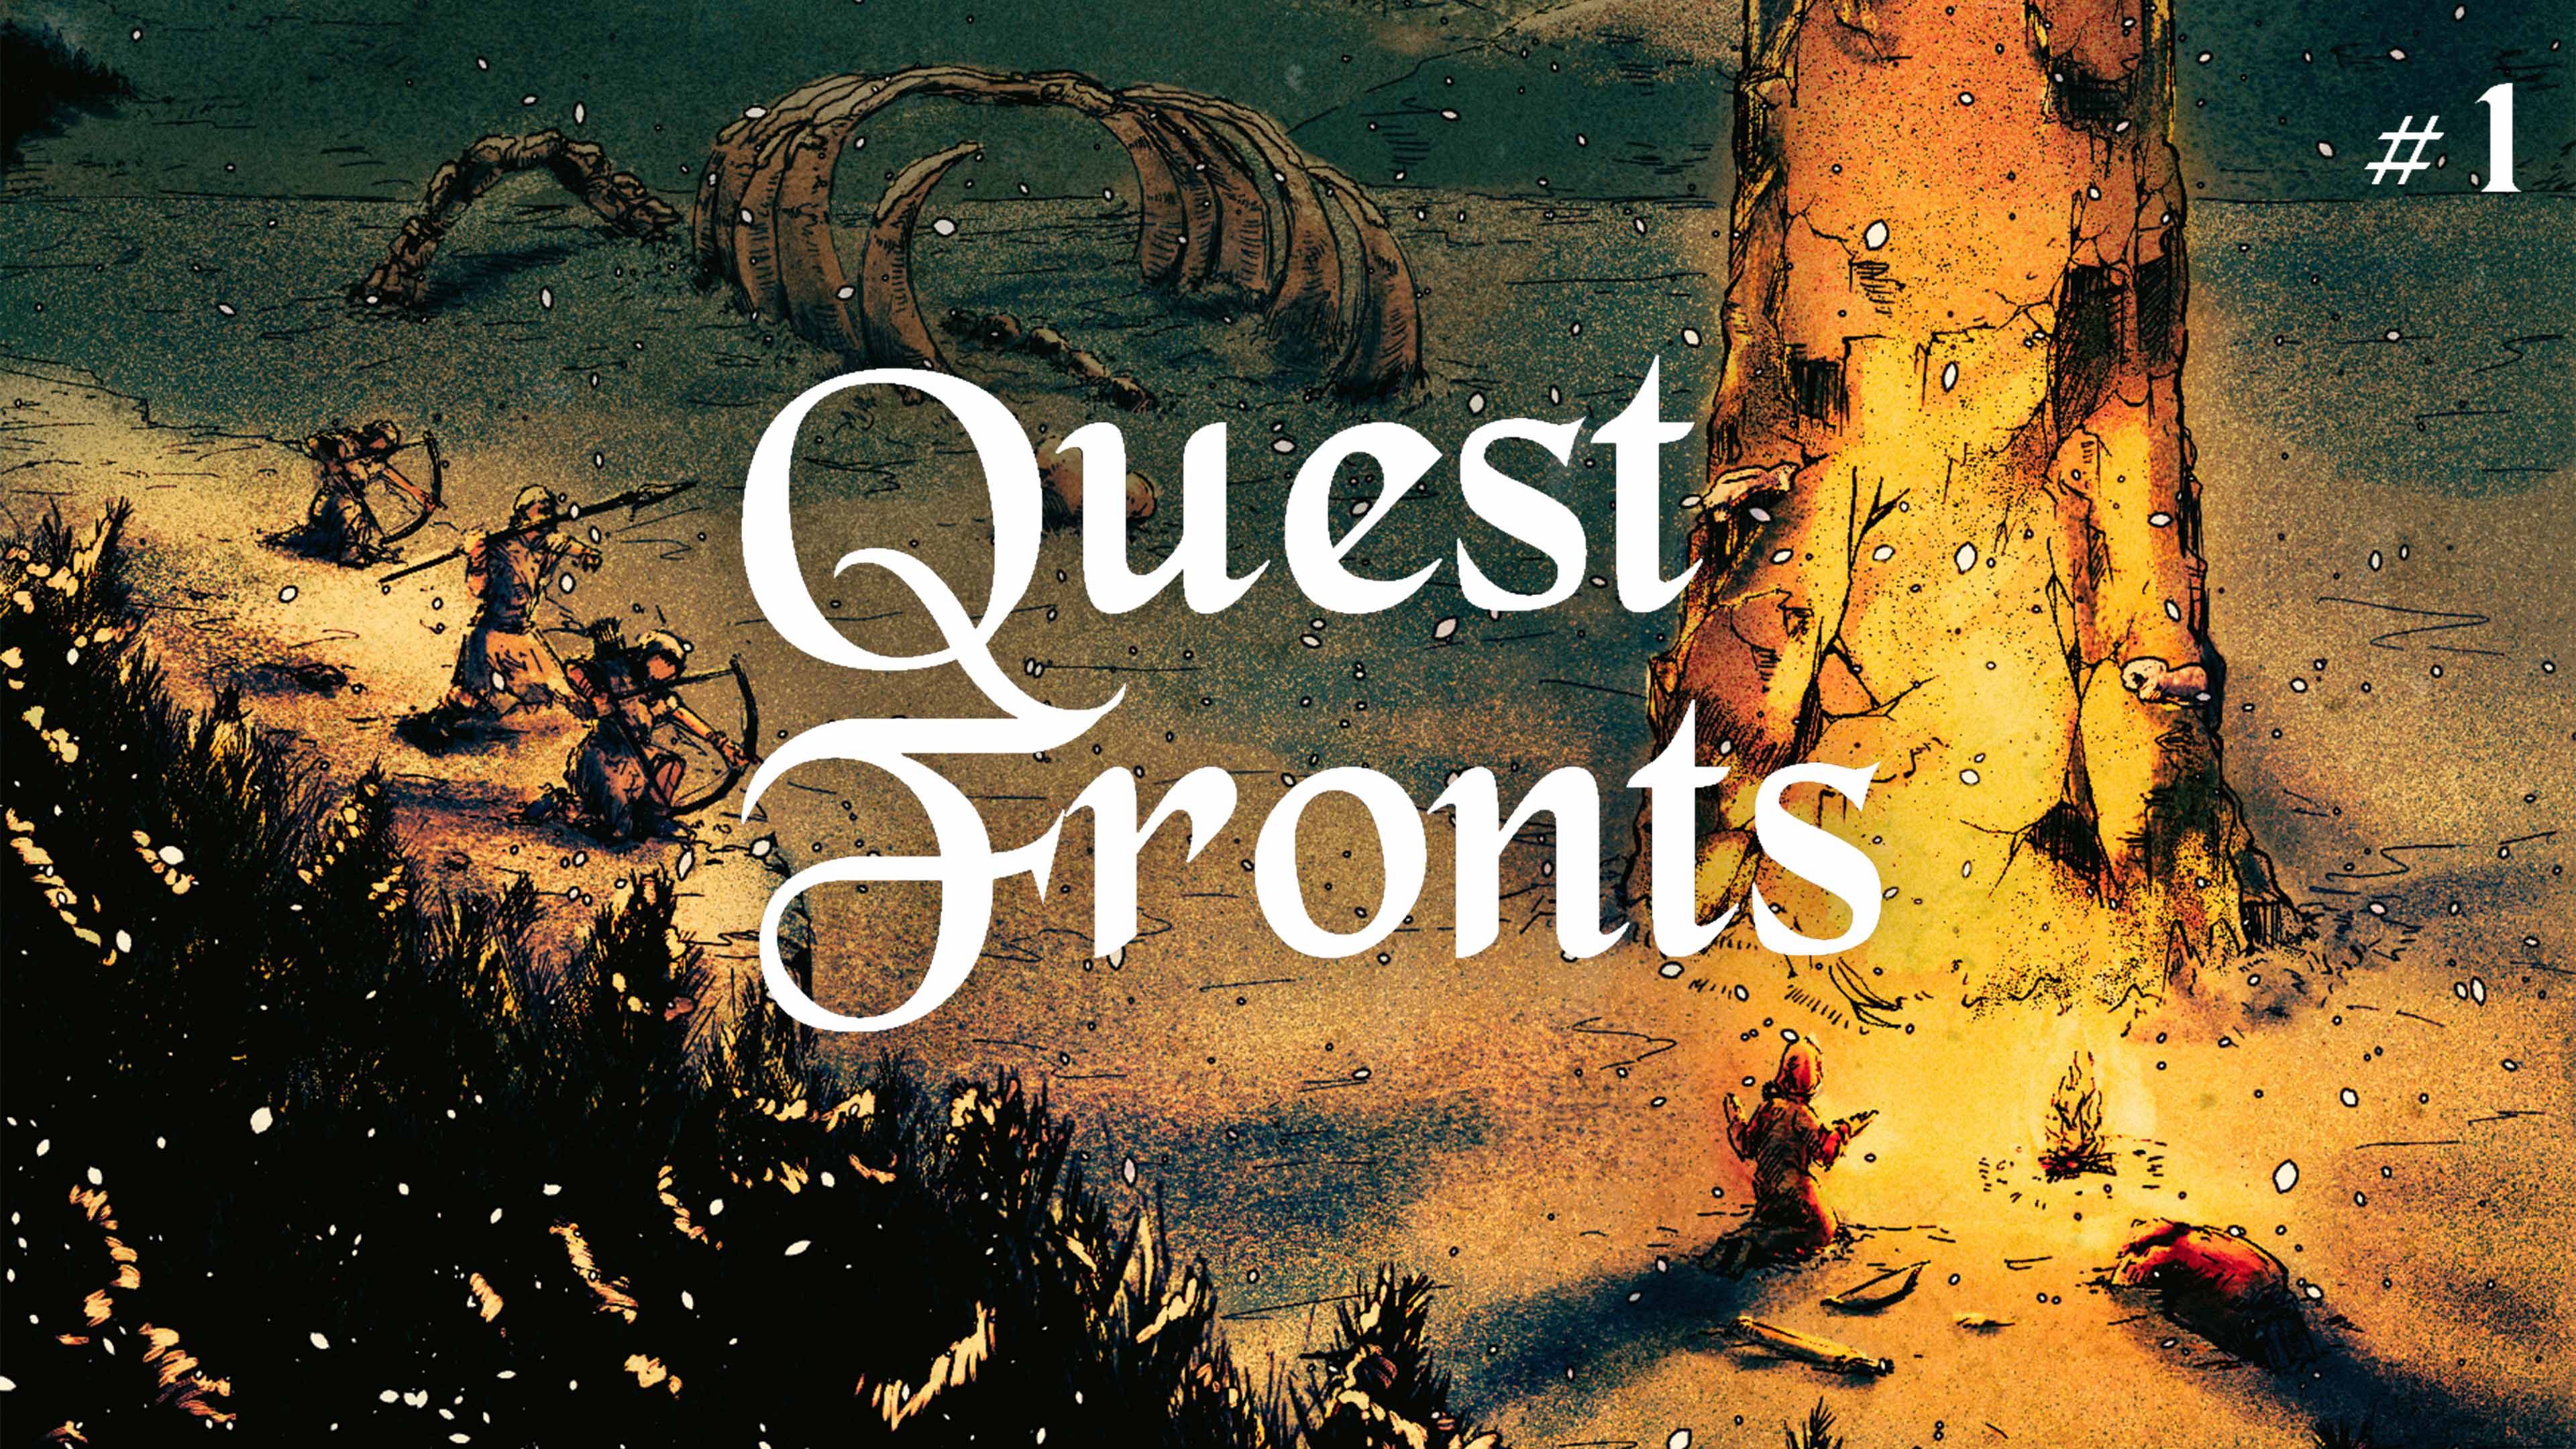 Quest Fronts #1